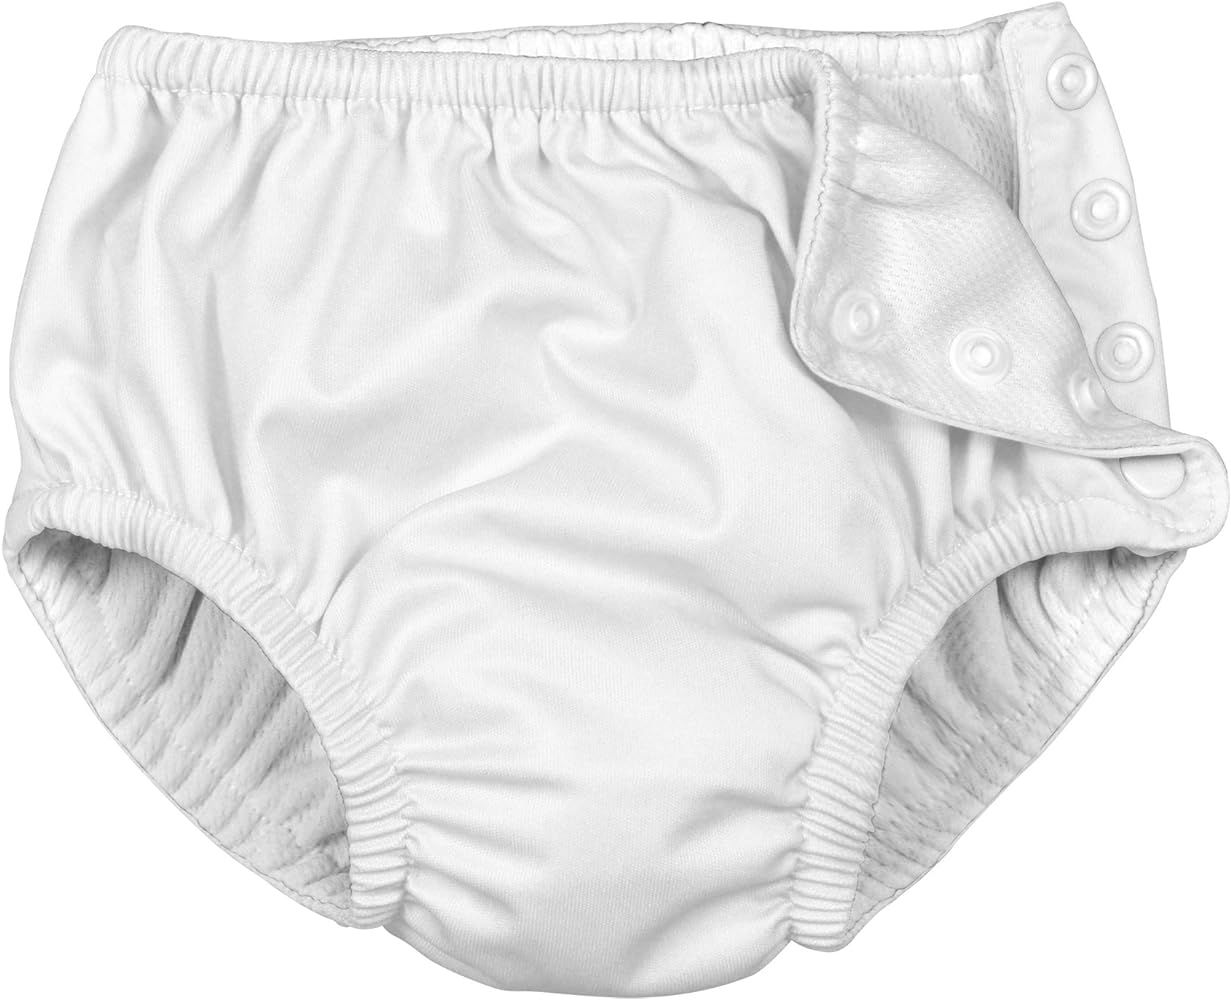 Snap Reusable Swim Diaper | No other diaper necessary, UPF 50+ protection | Amazon (US)